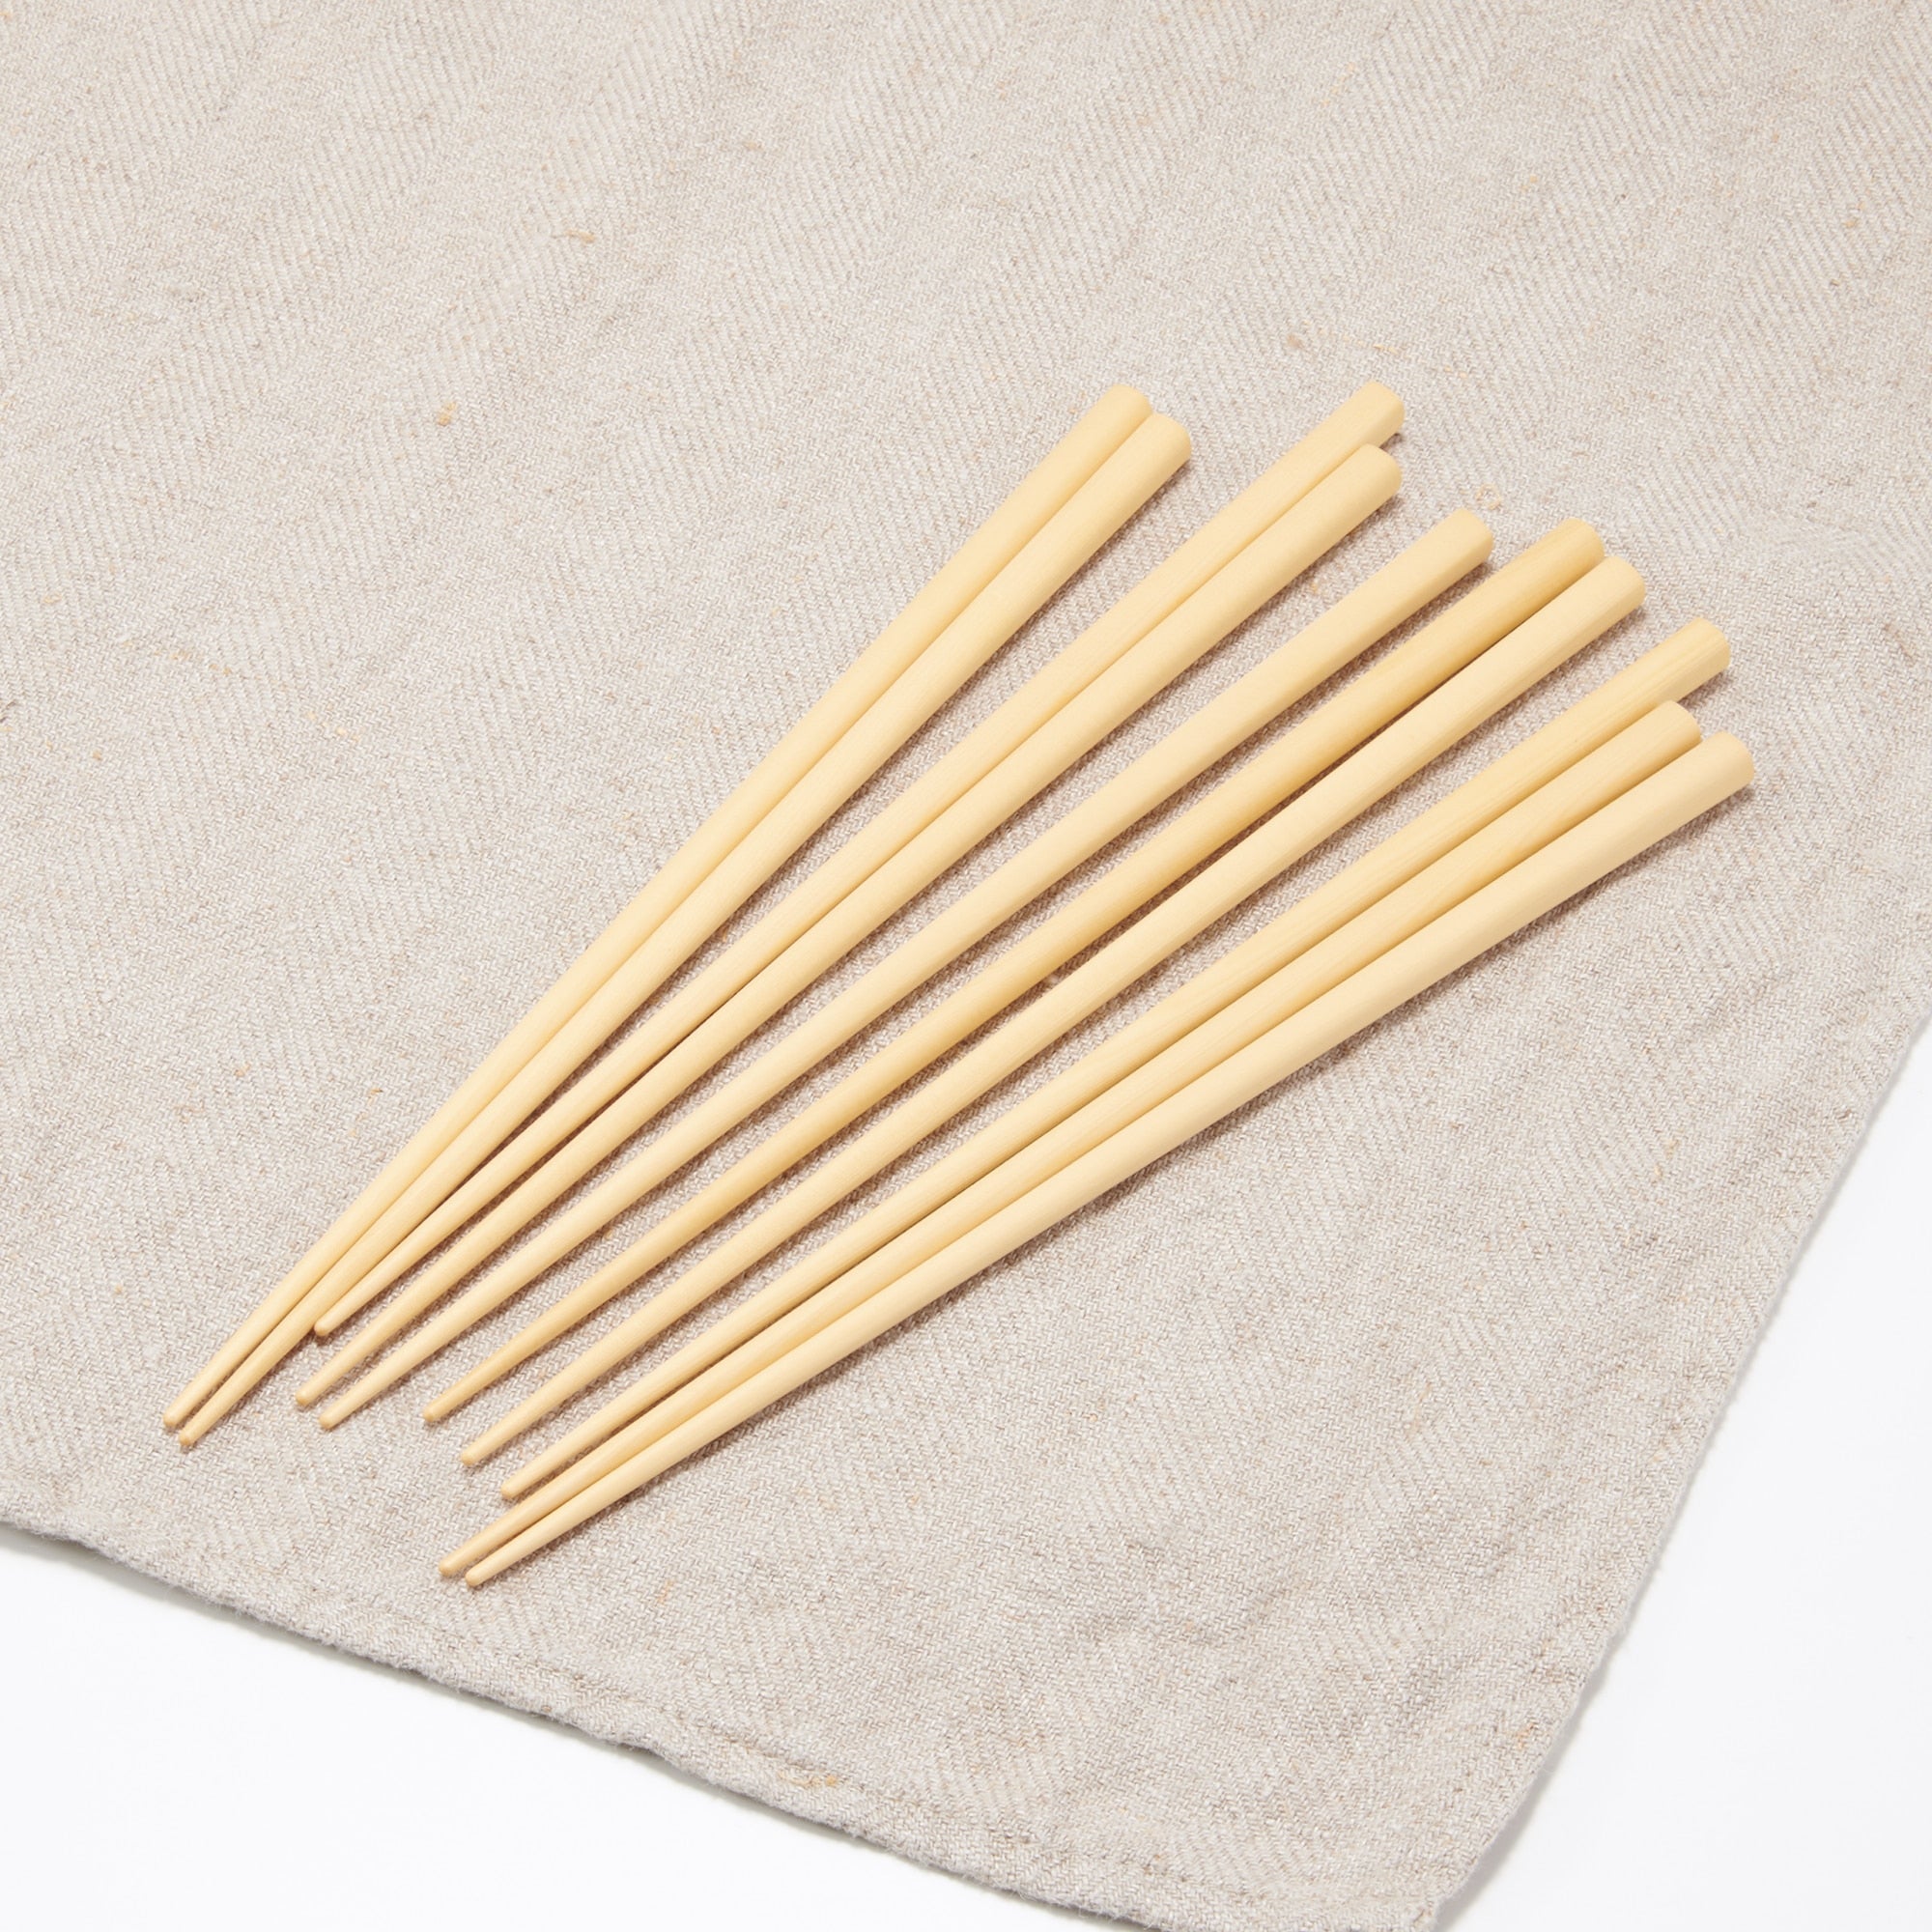 Yellow Cedar Chopsticks - 5 Pairs